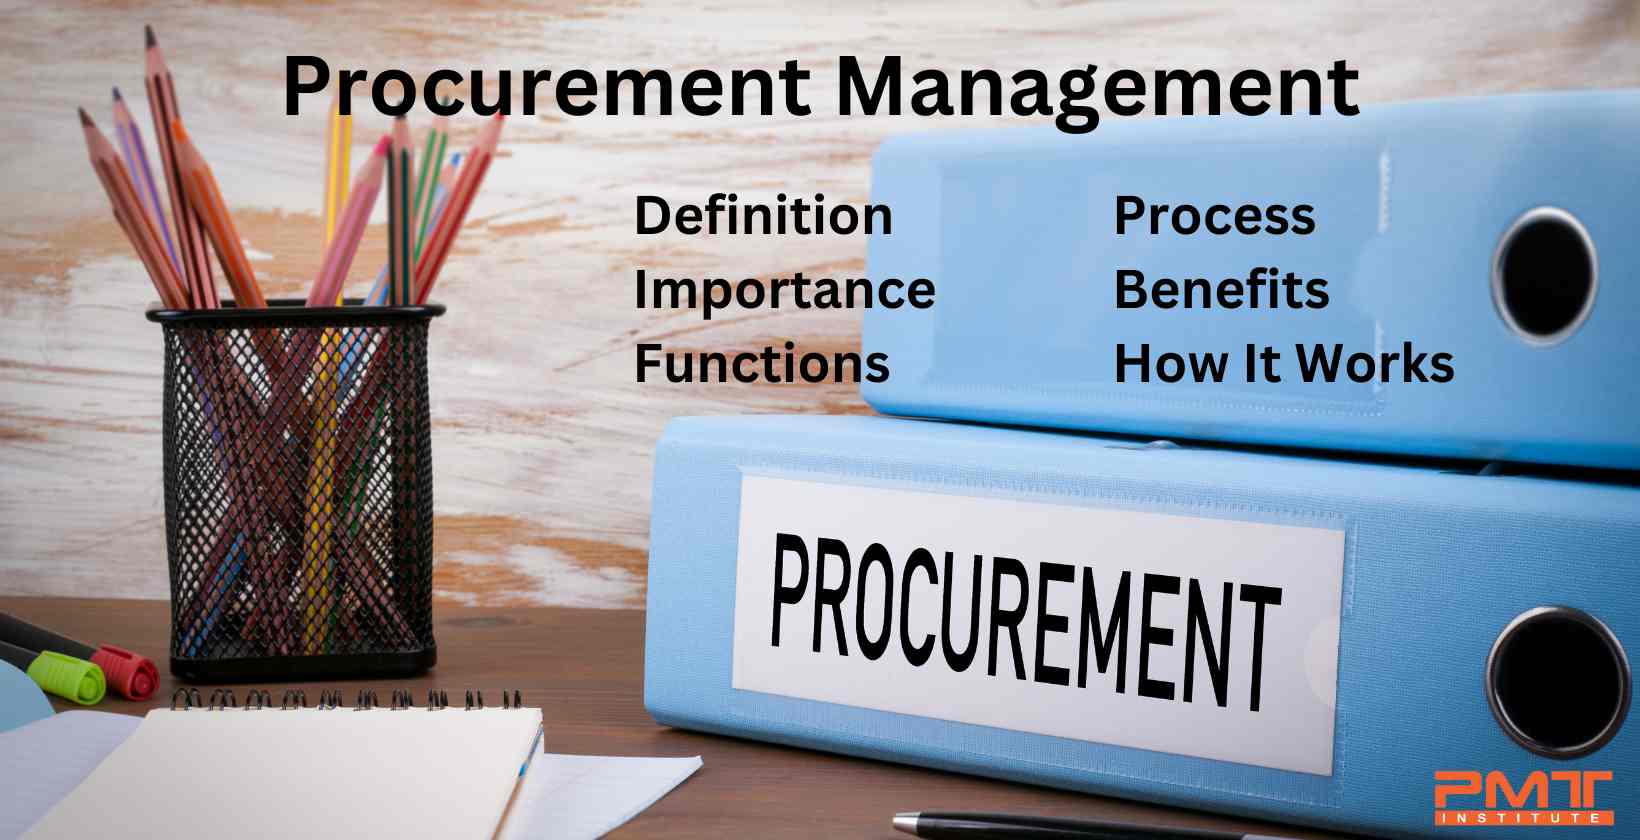 Procurement Management: Definition, Importance, Functions, Process, Benefits and How It Works